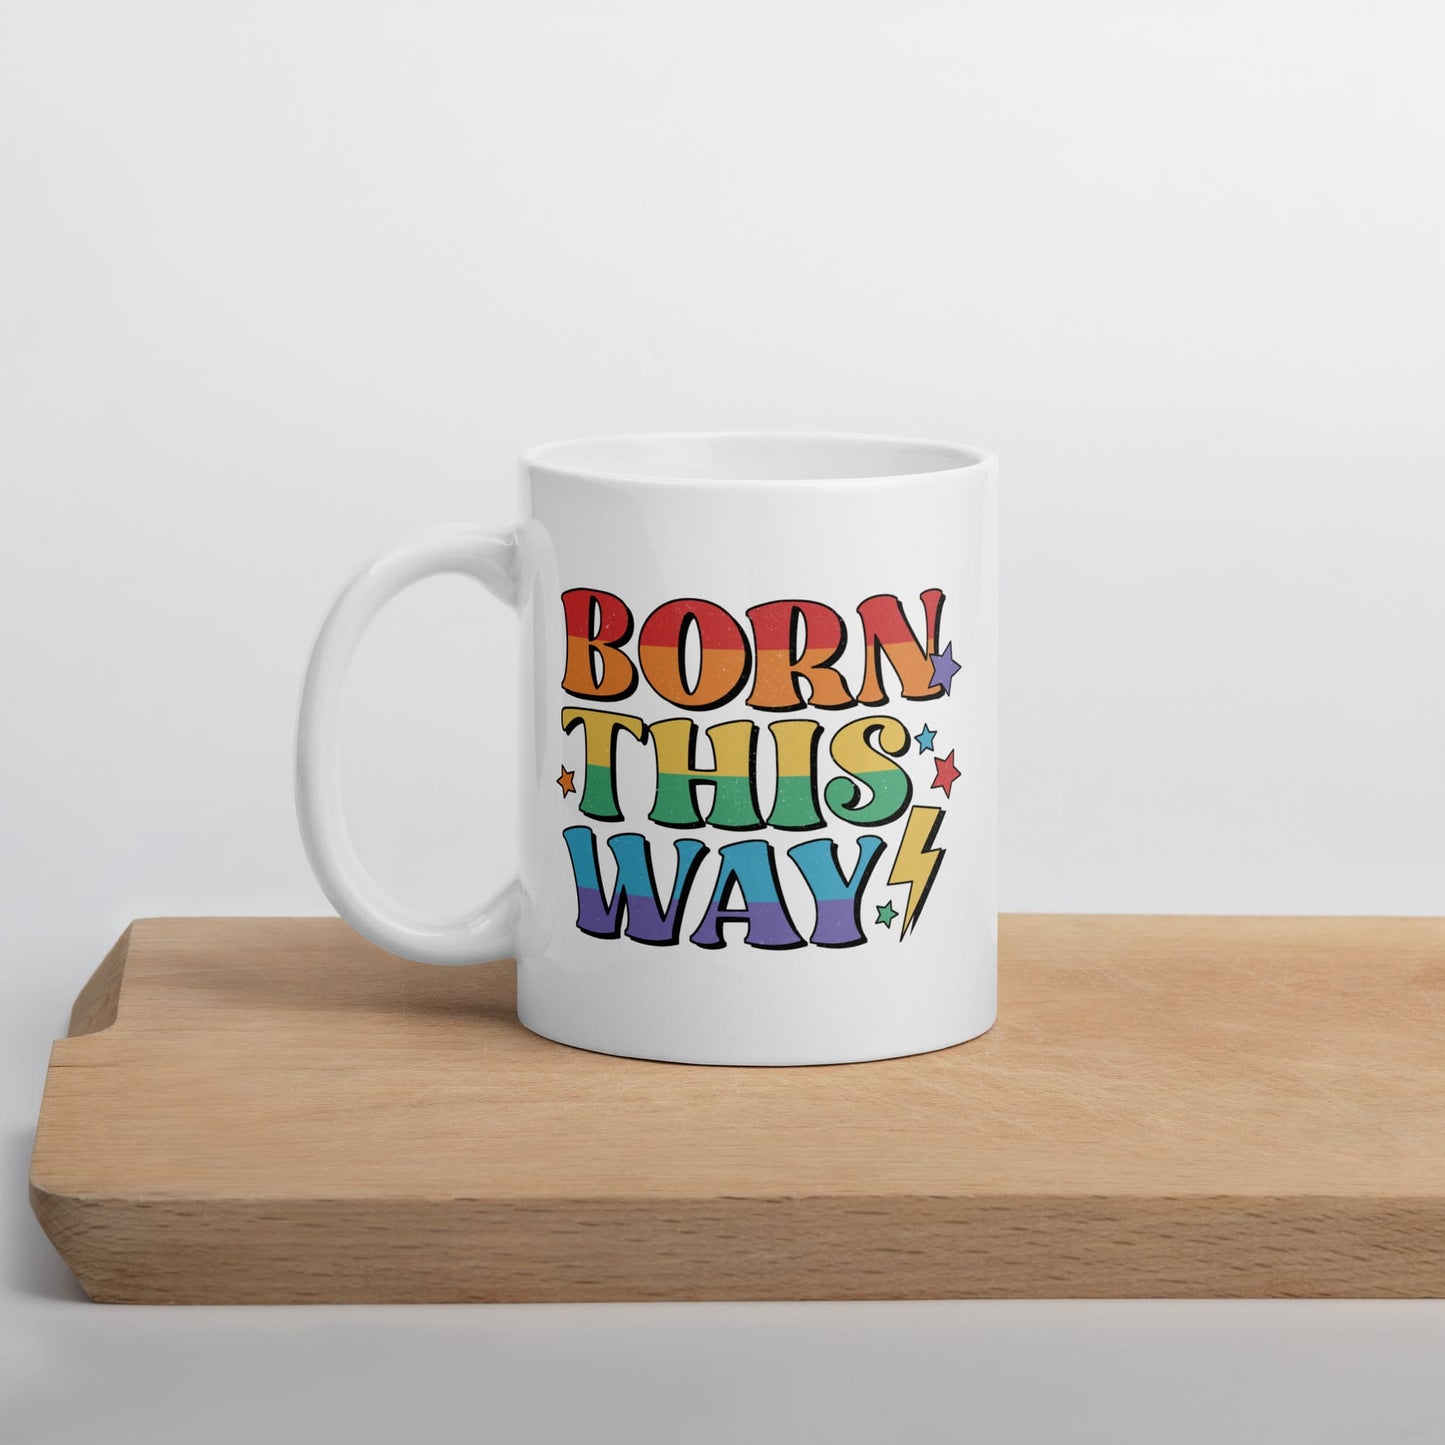 LGBTQ pride mug, born this way coffee or tea cup on table